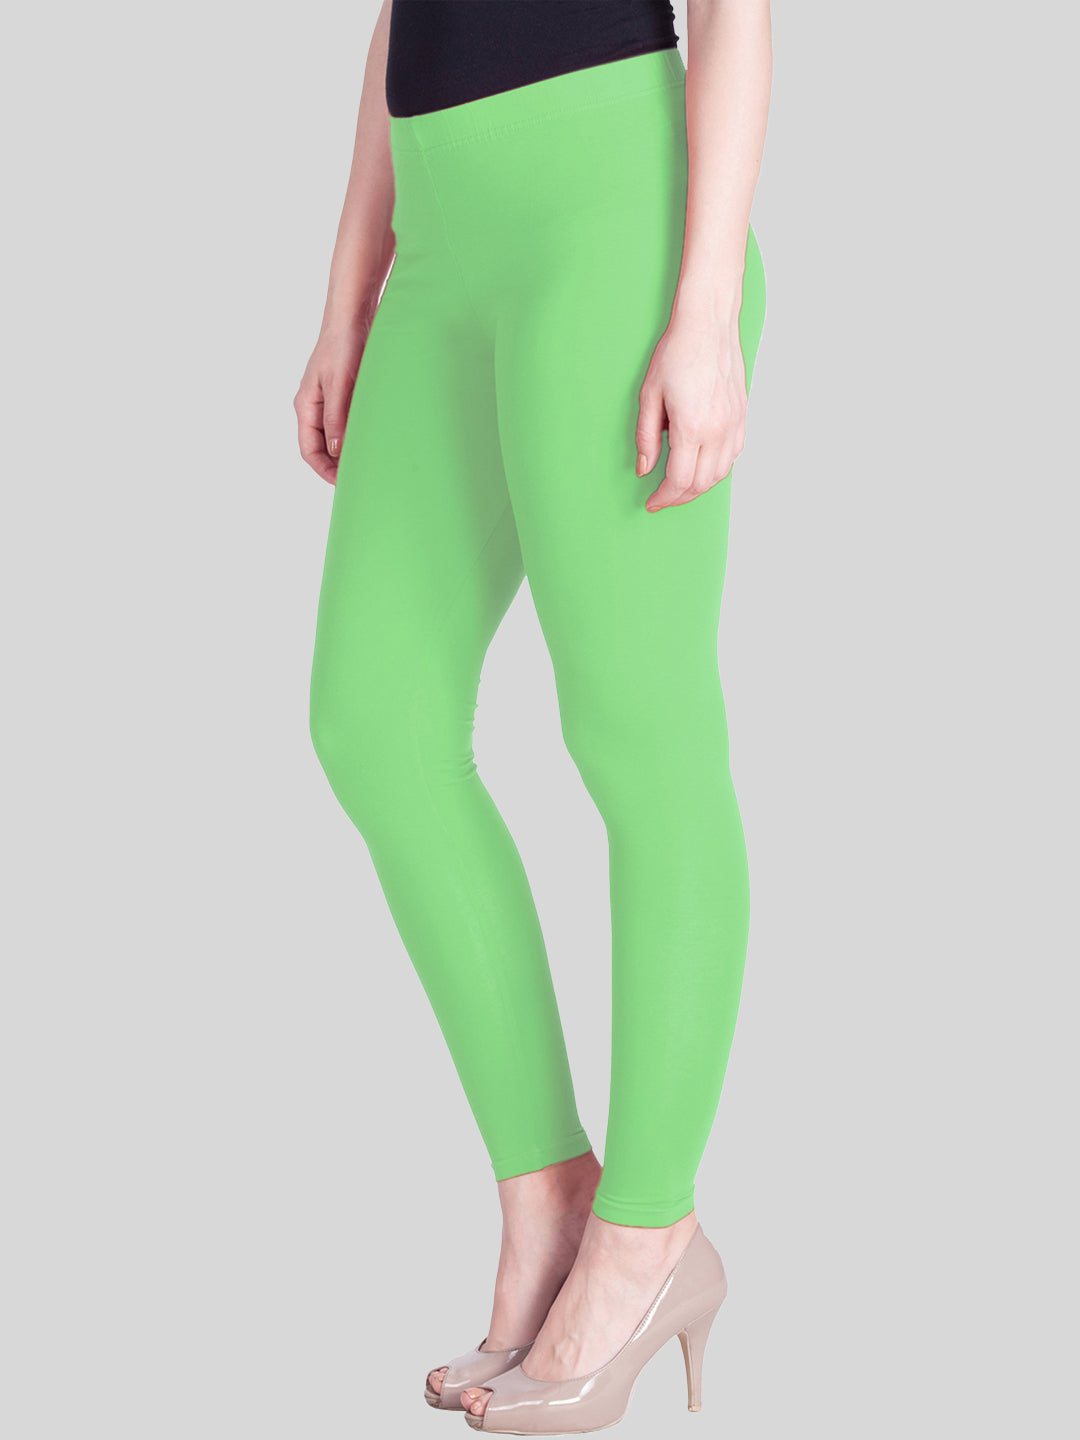 Buy Rays A India Cotton Ankle Length Leggings/Women's Legging/Multi-Color/Pack  of 5 (Black-Light Green-Beige-Pink-Dark Green) at